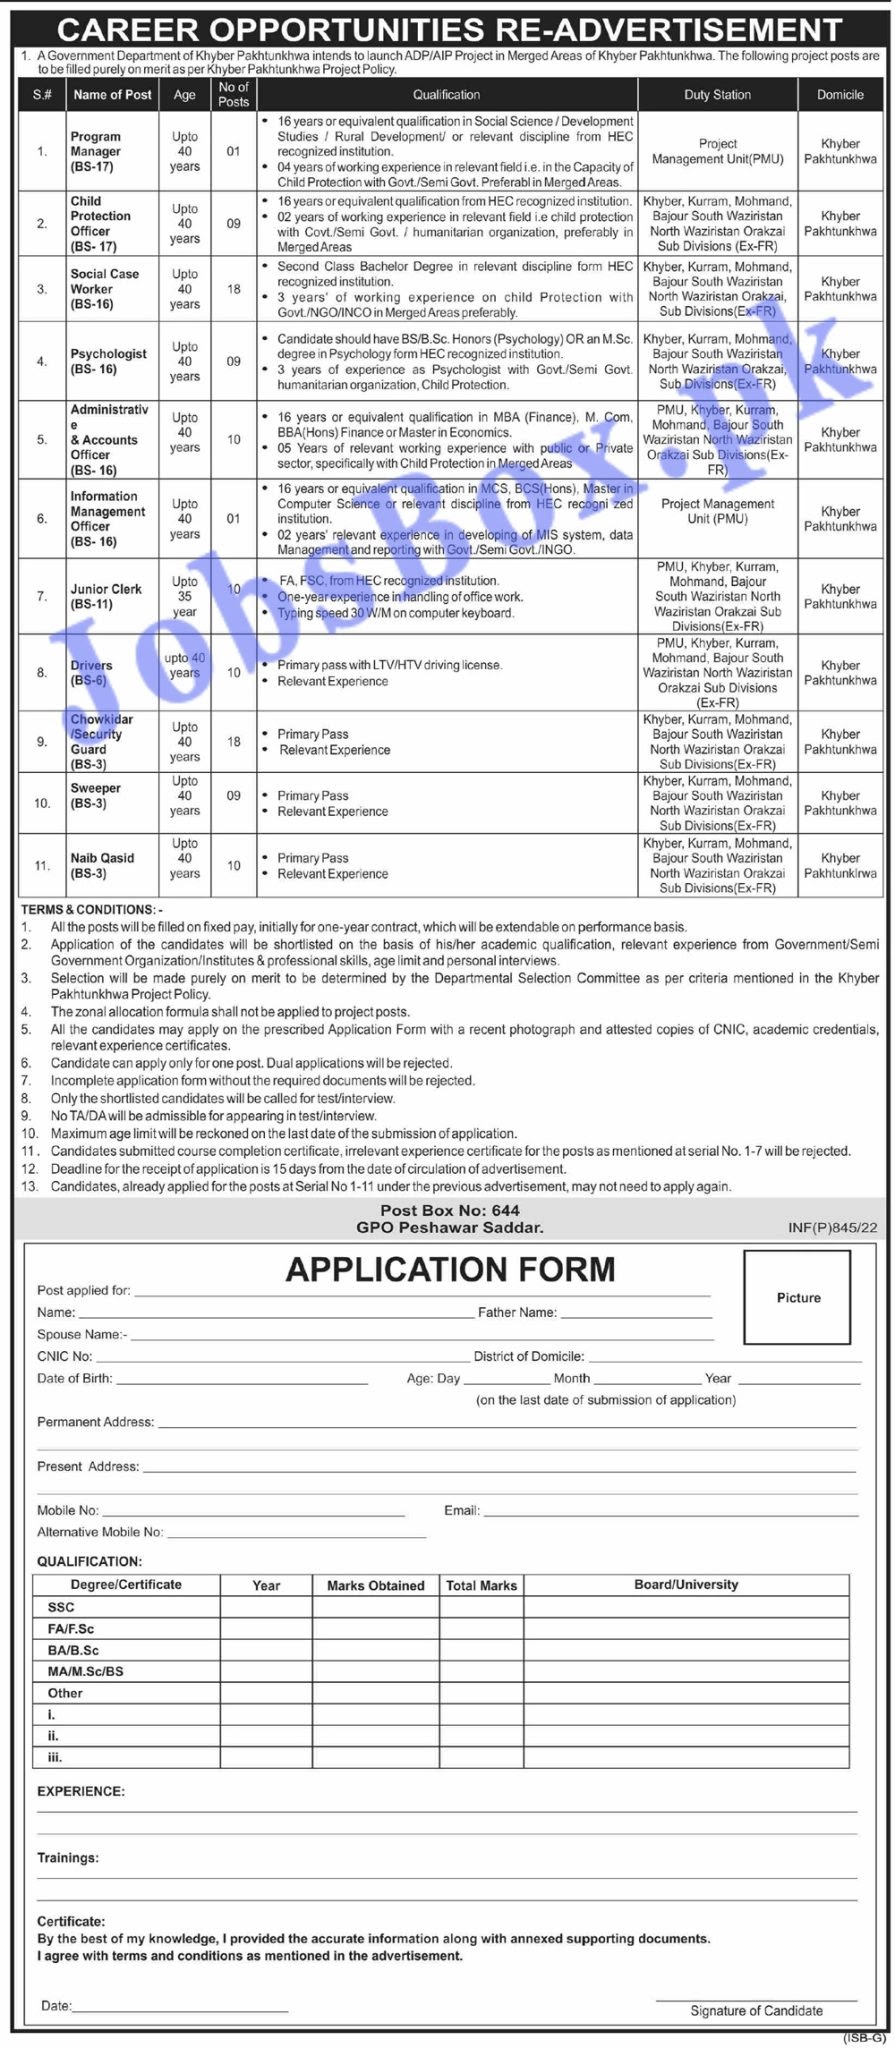 Public Sector Organization PO Box 644 Jobs 2022 in Pakistan